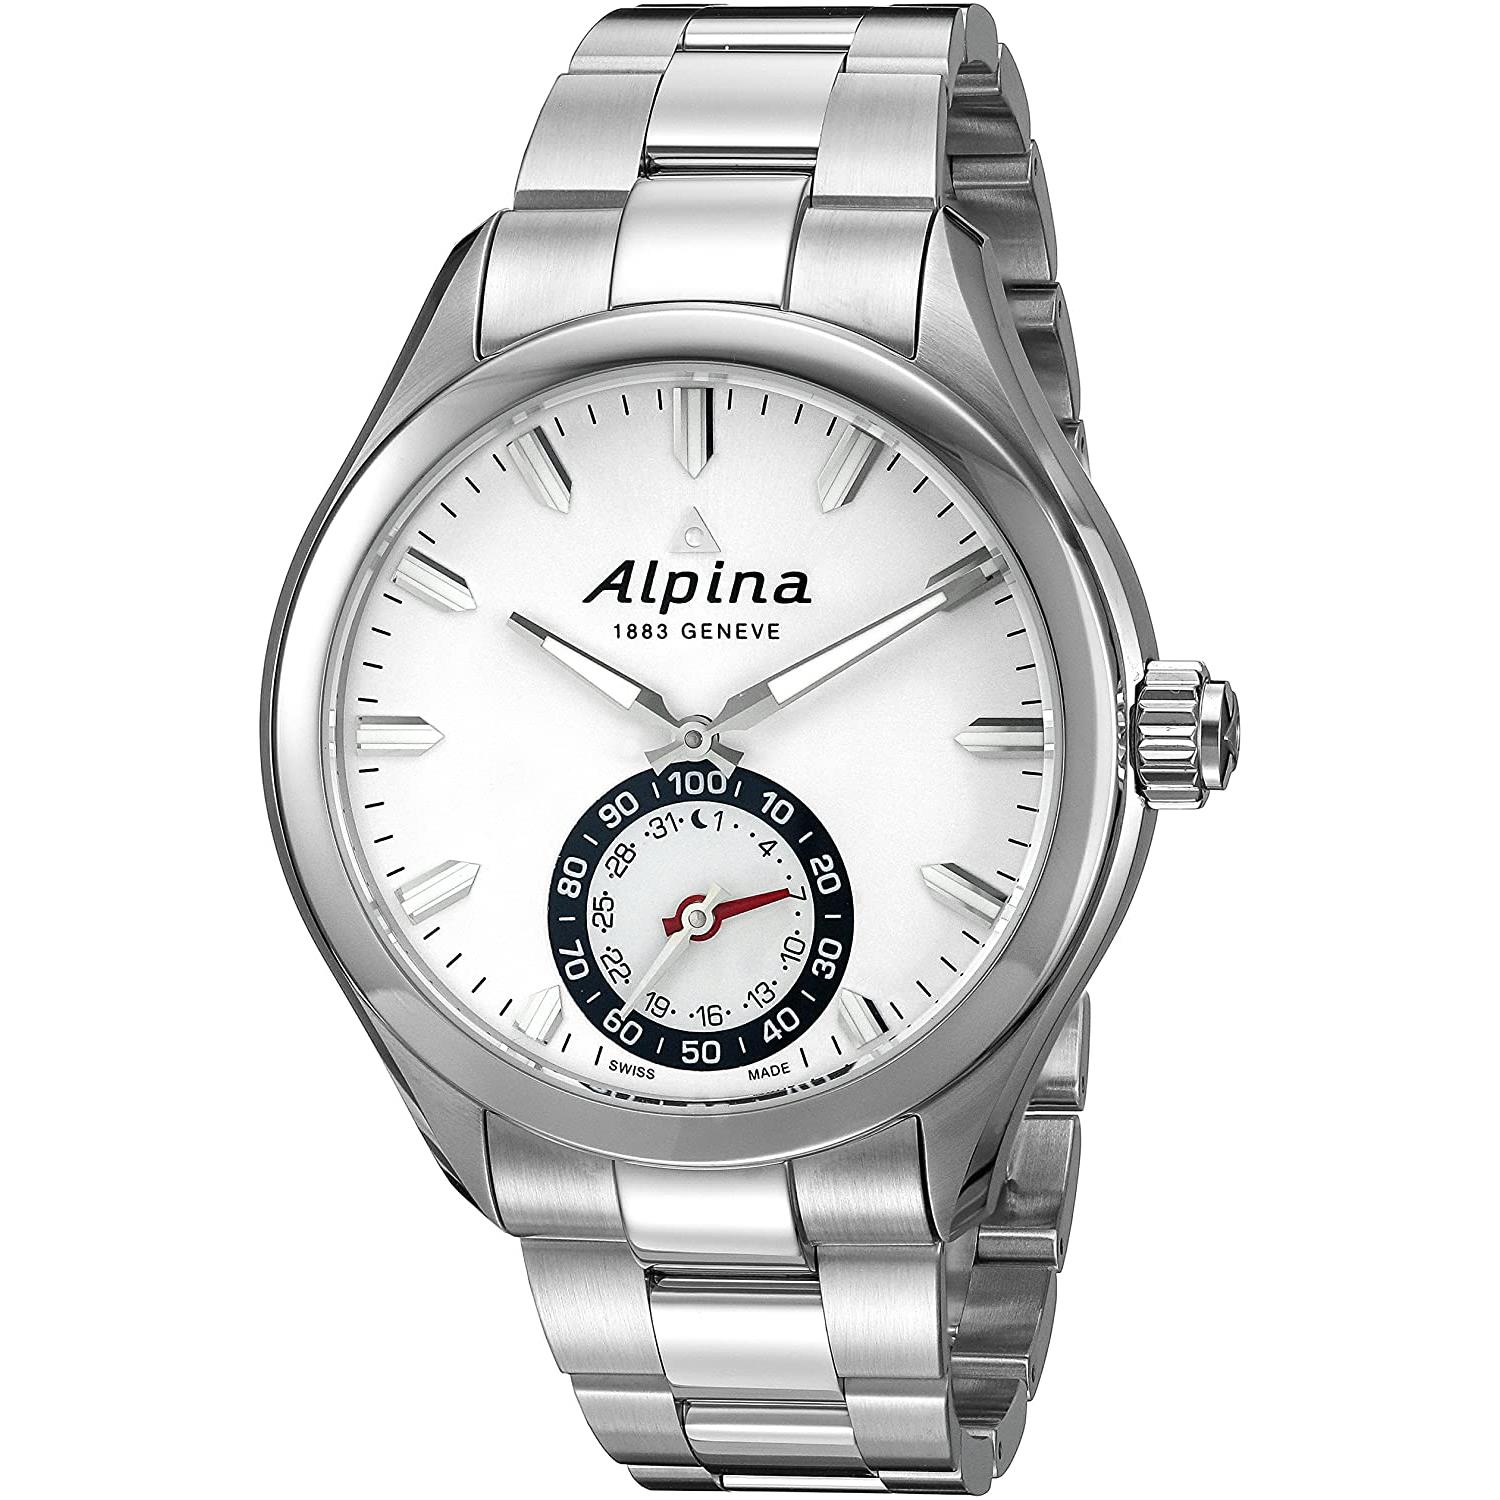 ساعت مچی آلپینا  ALPINA کد AL-285S5AQ6B